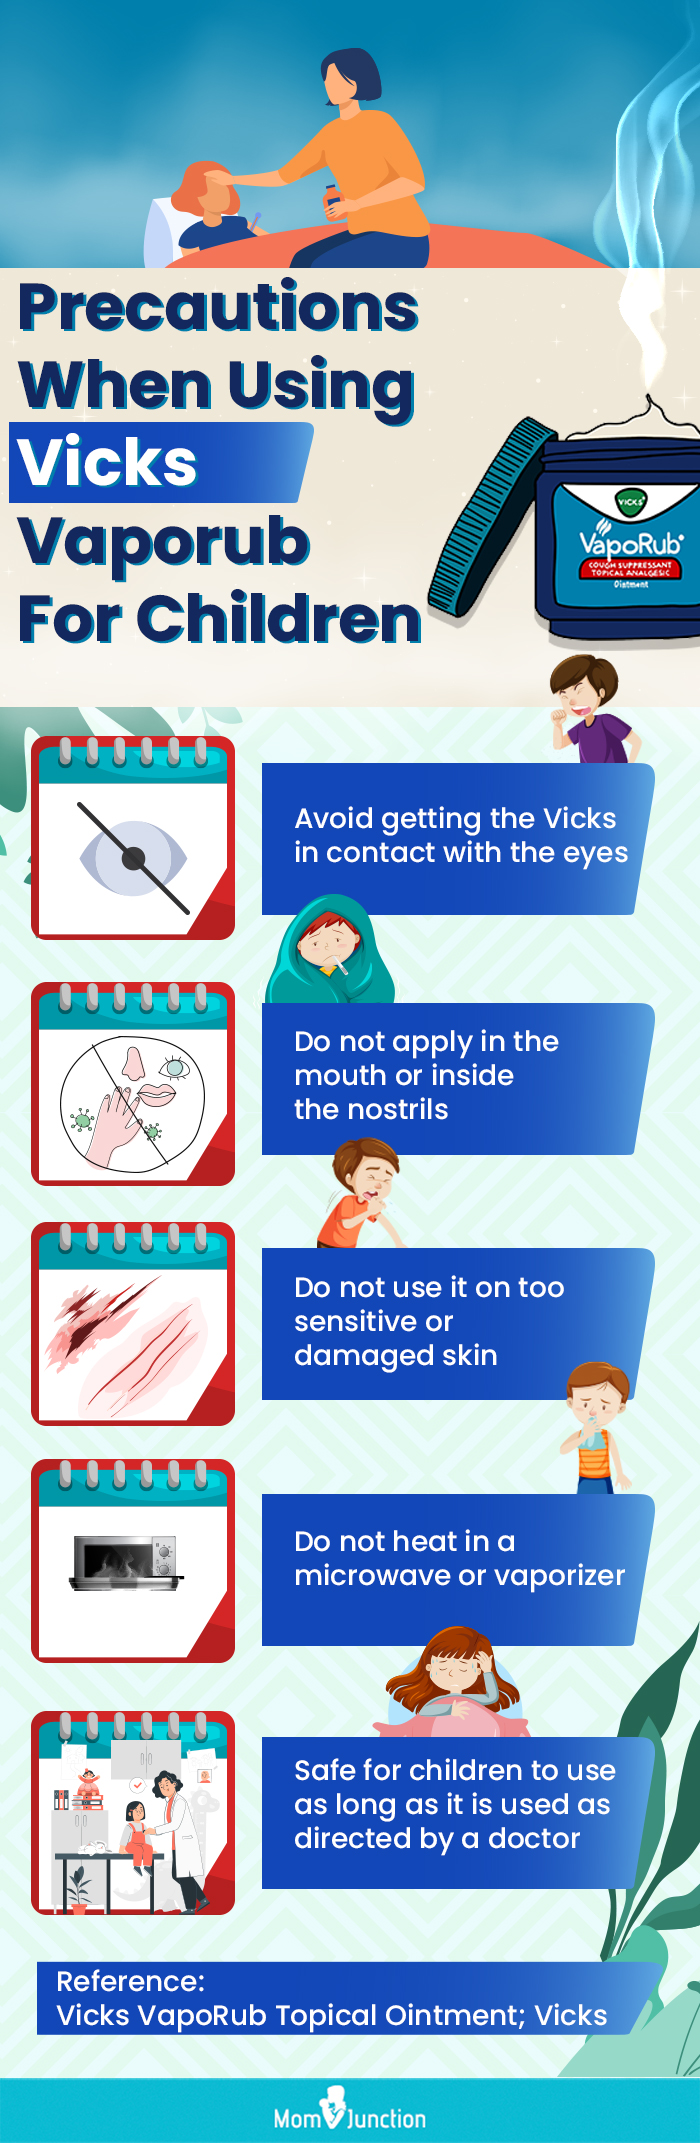 VICKS VapoRub Vaporizing Ointment 50g, Cough, Cold & Flu